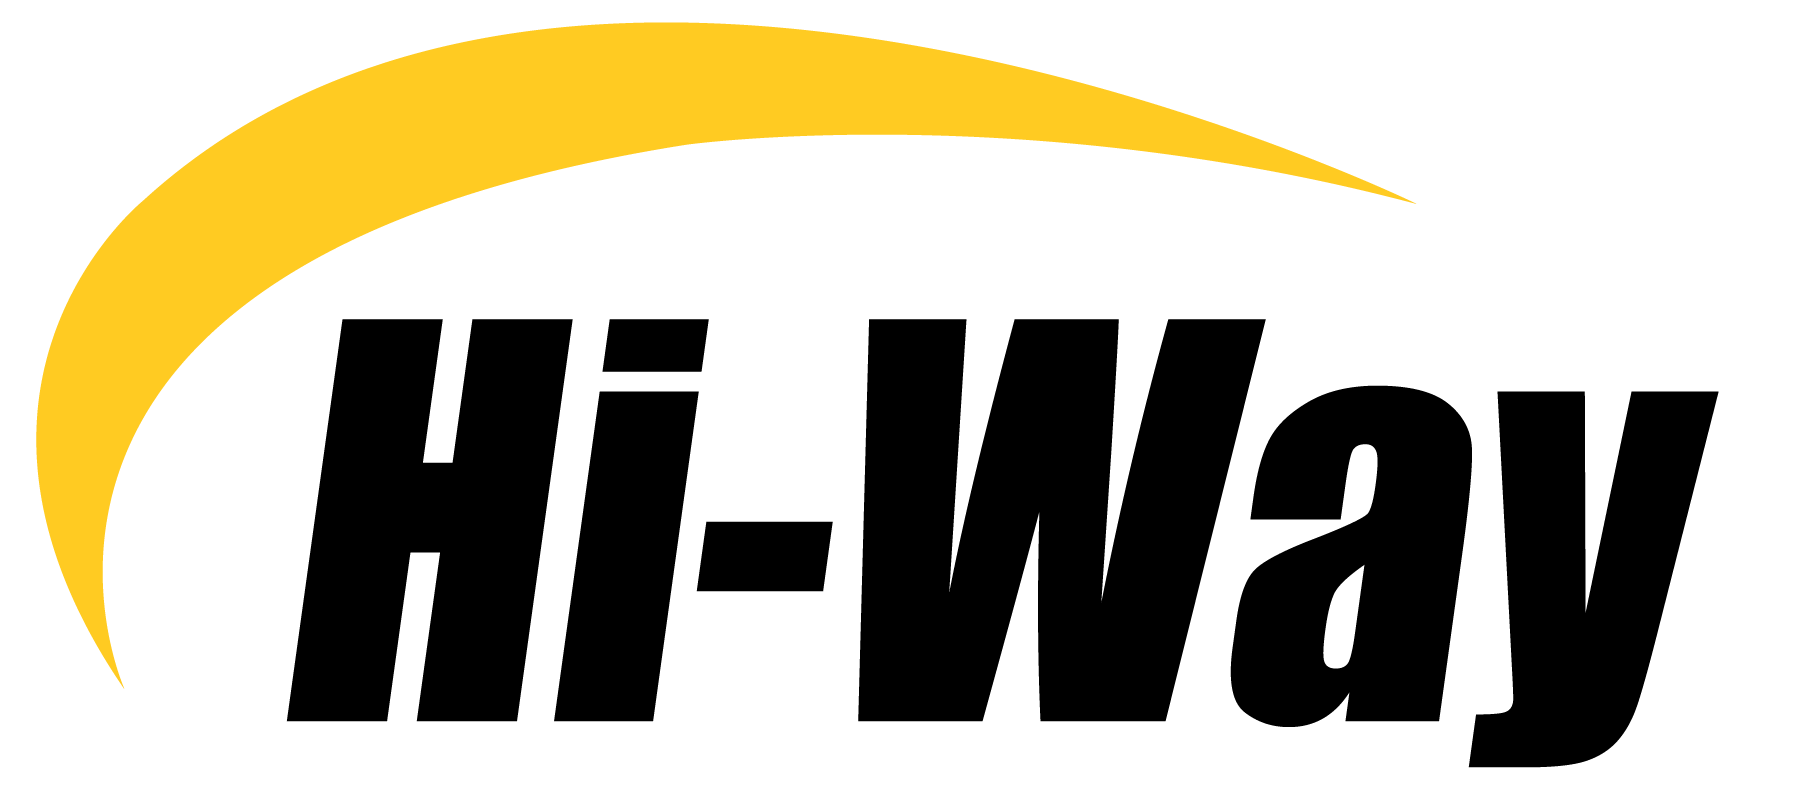 WA Y Logo - Hi-Way Salt Spreaders, Sand Spreaders, and Deicing Equipment